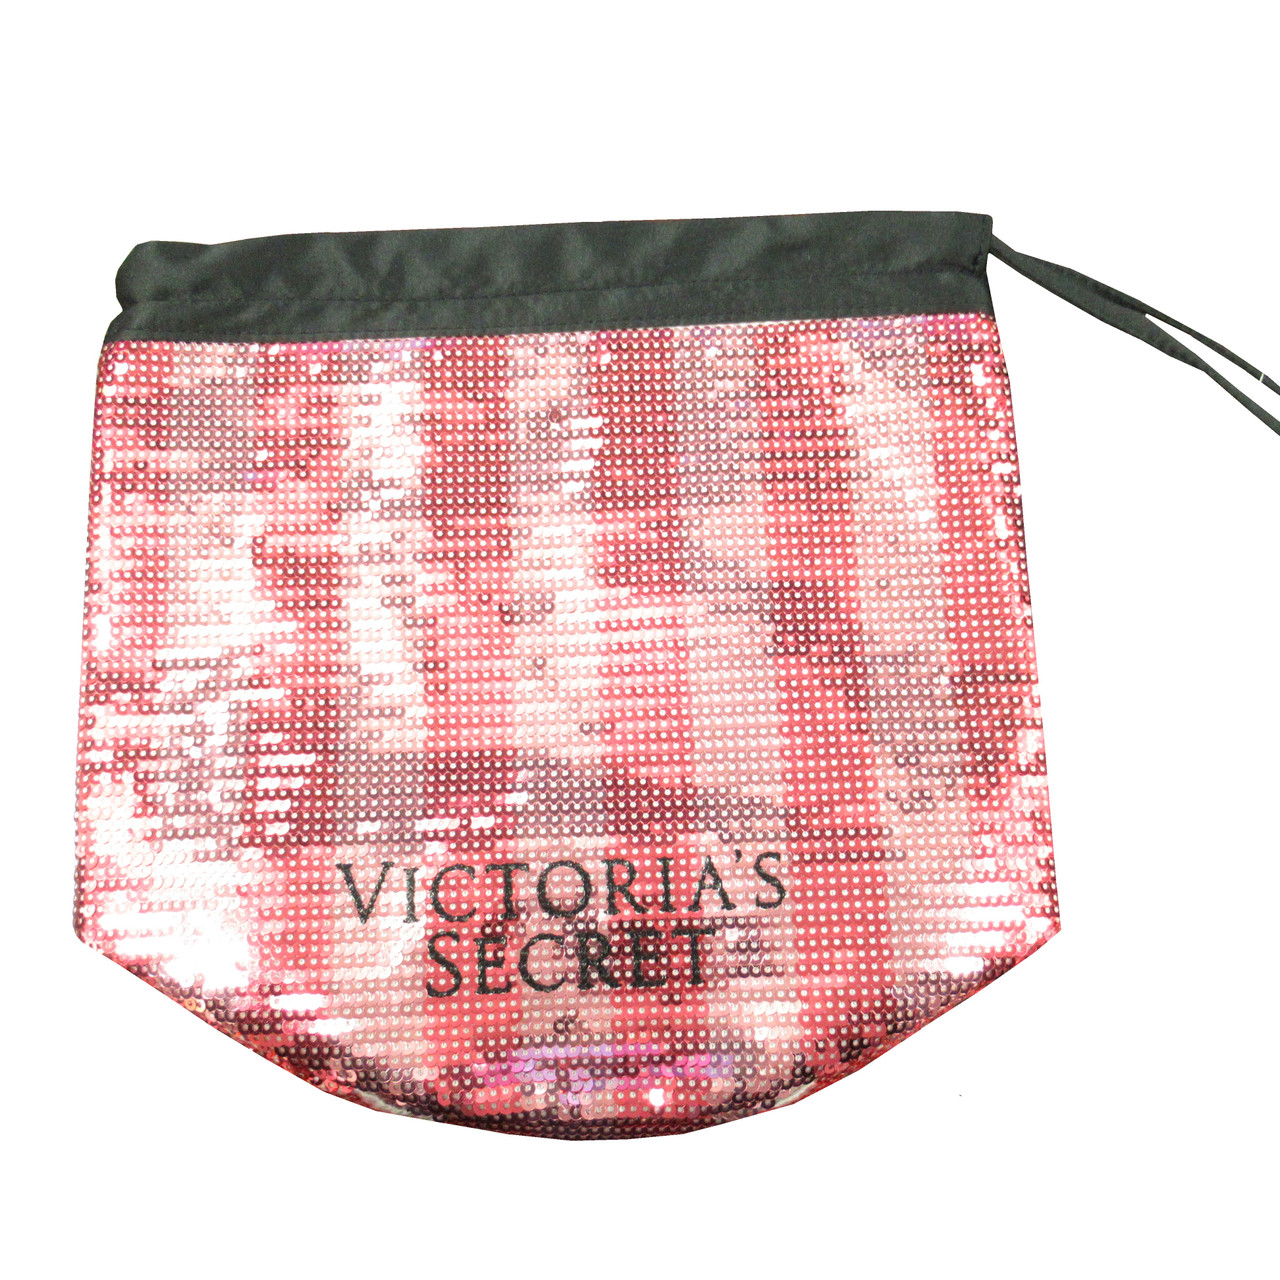 VICTORIA'S SECRET PINK SEQUIN BAG - Nandansons International Inc.